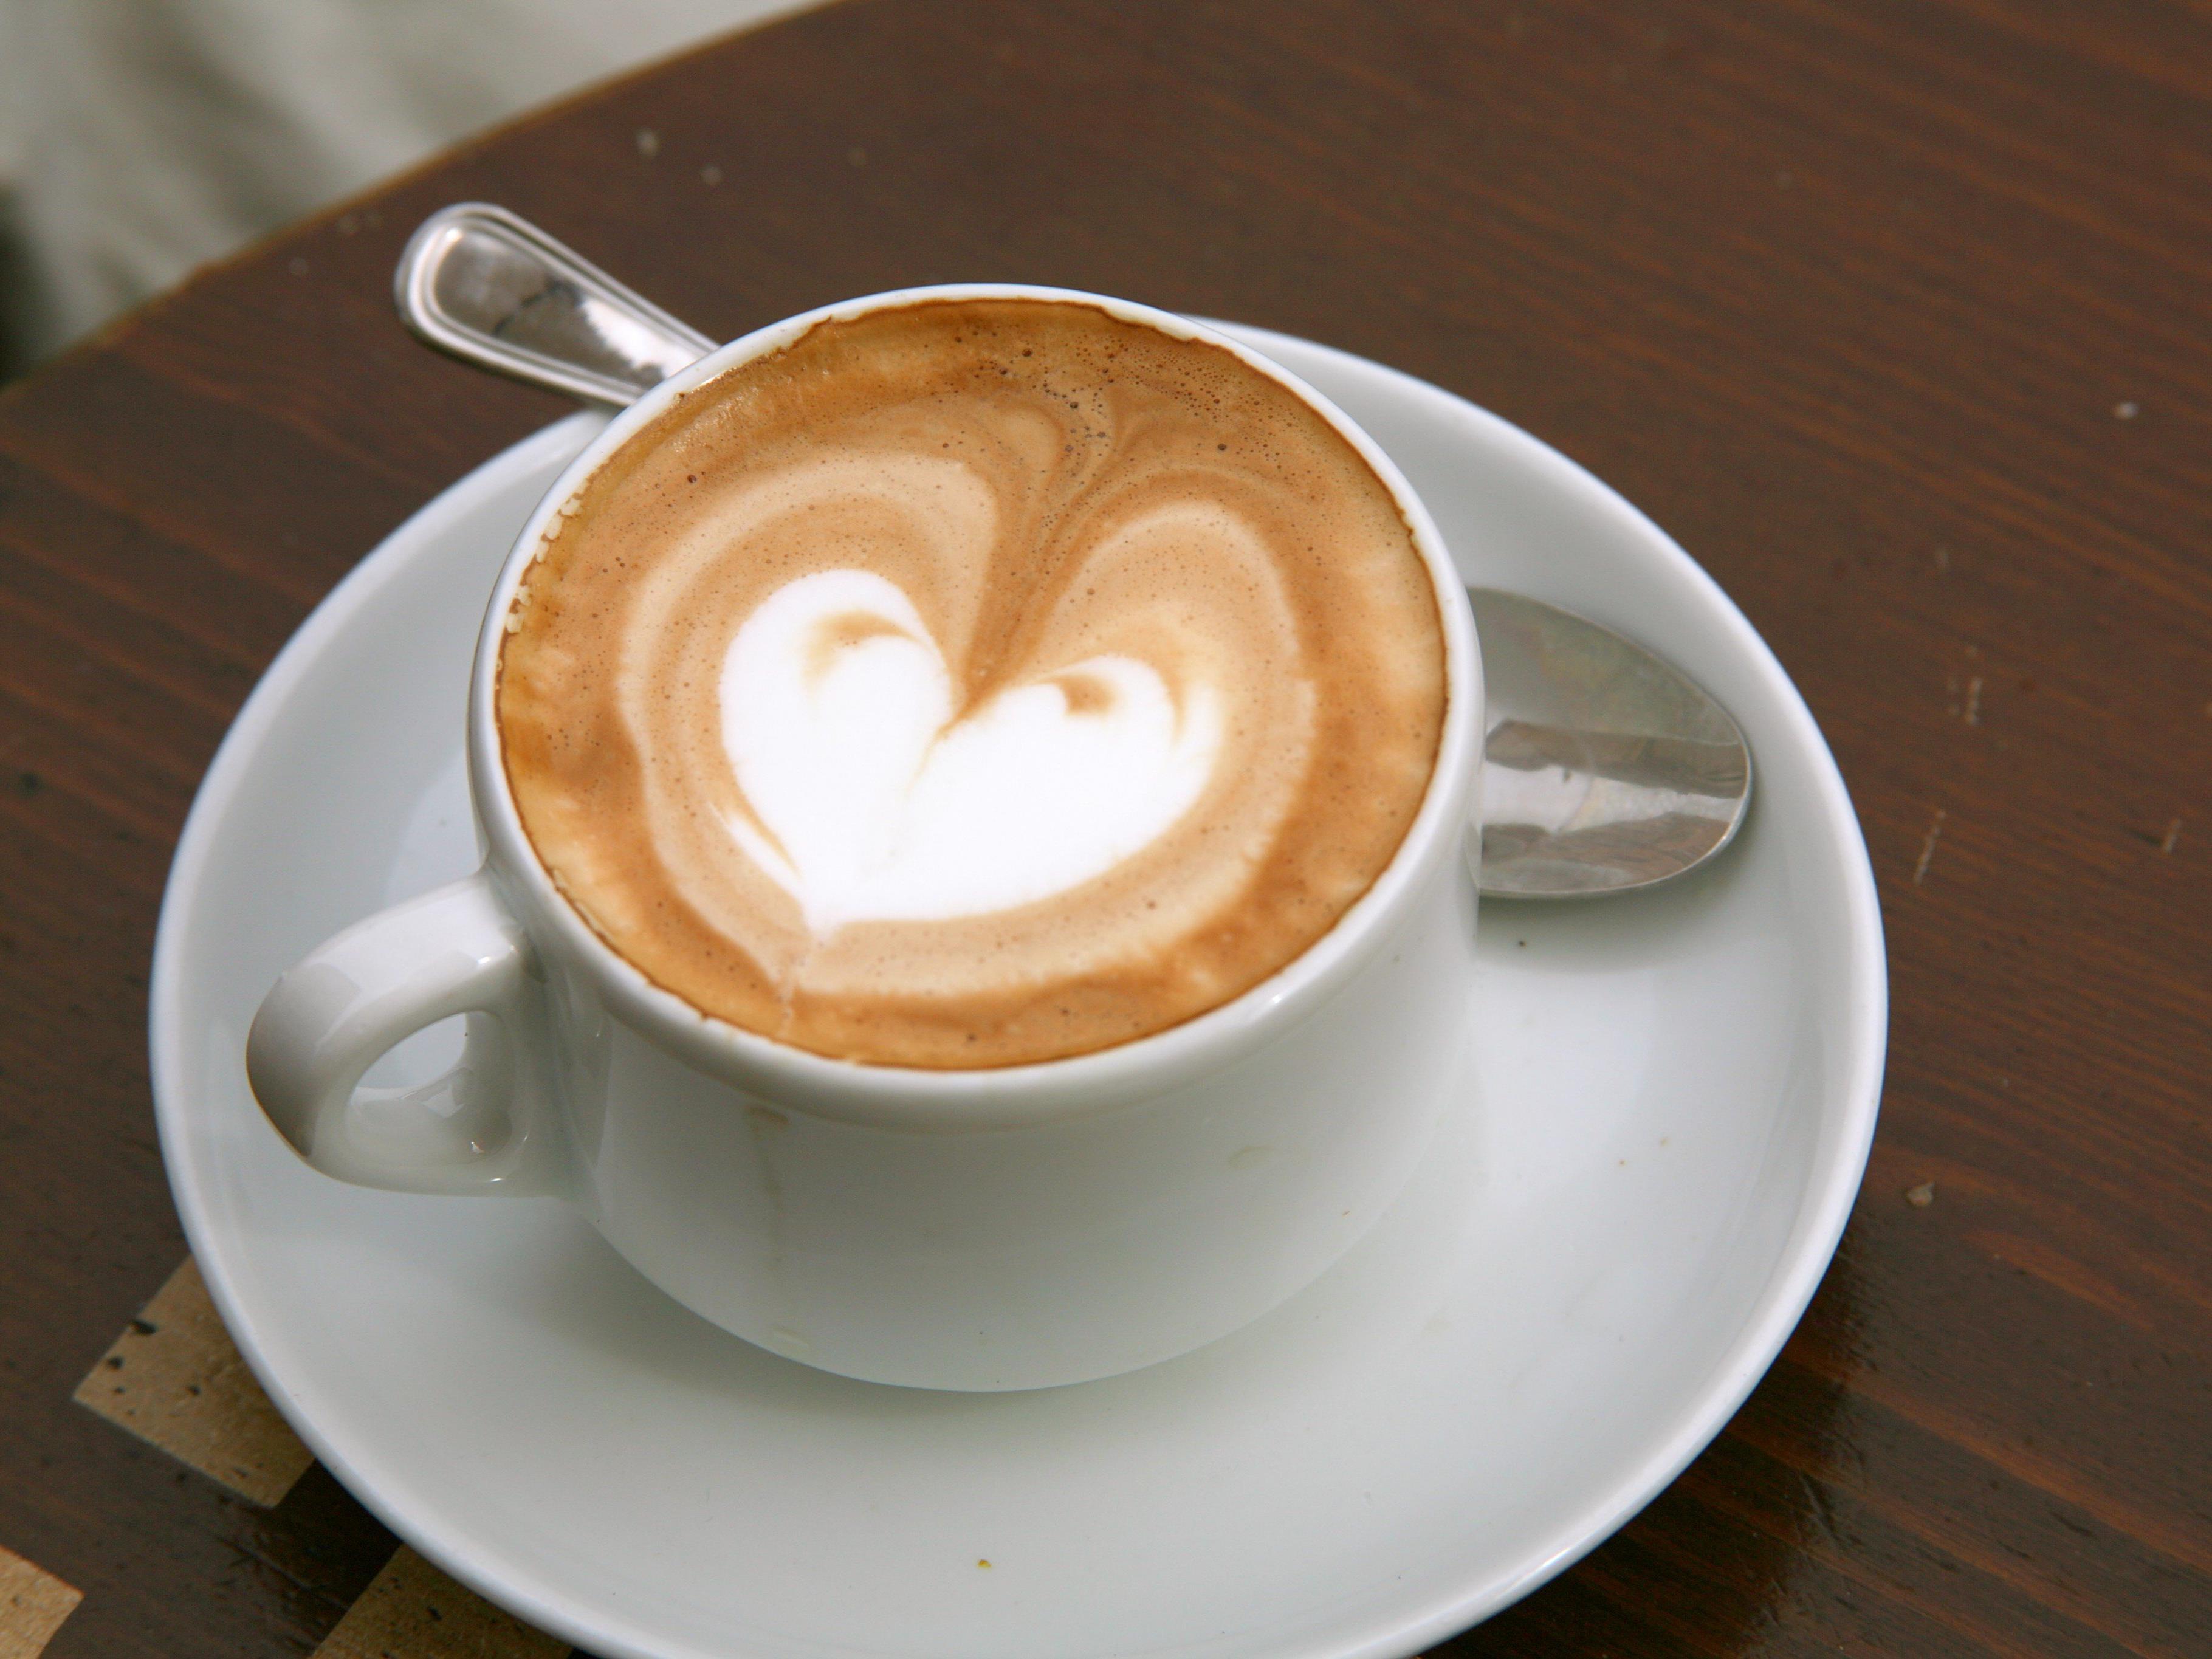 Höflich bestellen bedeutet günsitgeren Kaffee.